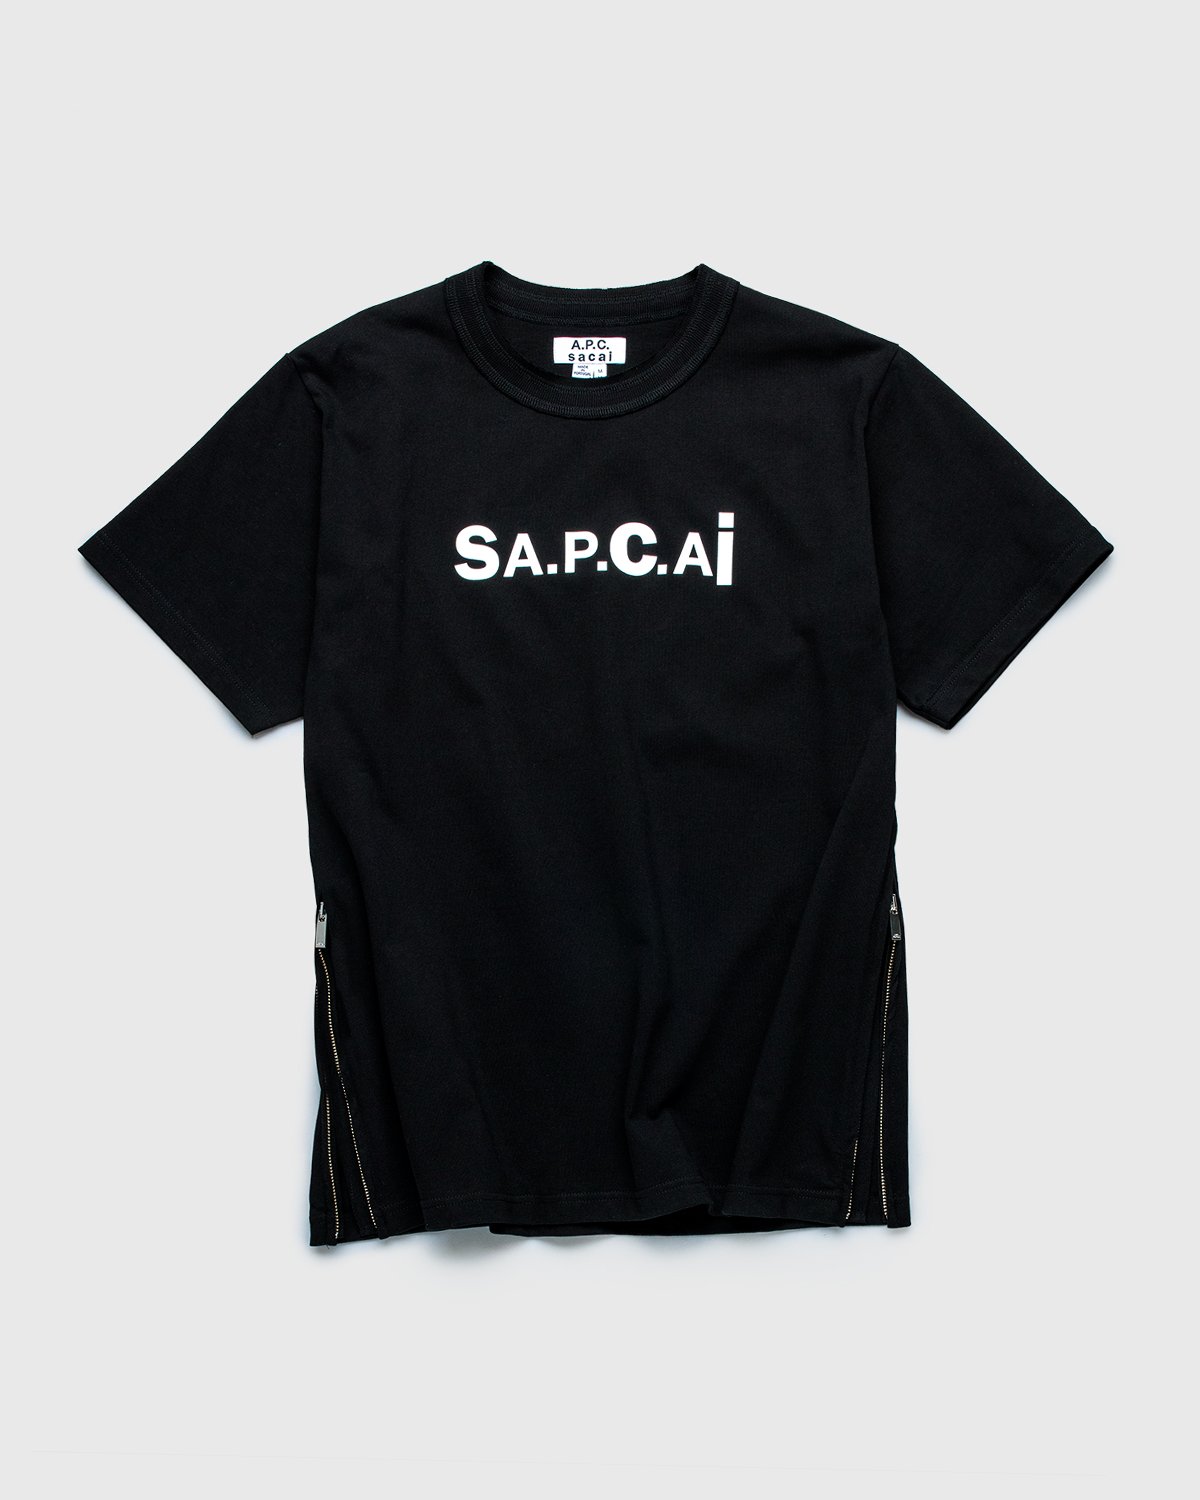 A.P.C. x Sacai - Kiyo T-Shirt Black - Clothing - Black - Image 1